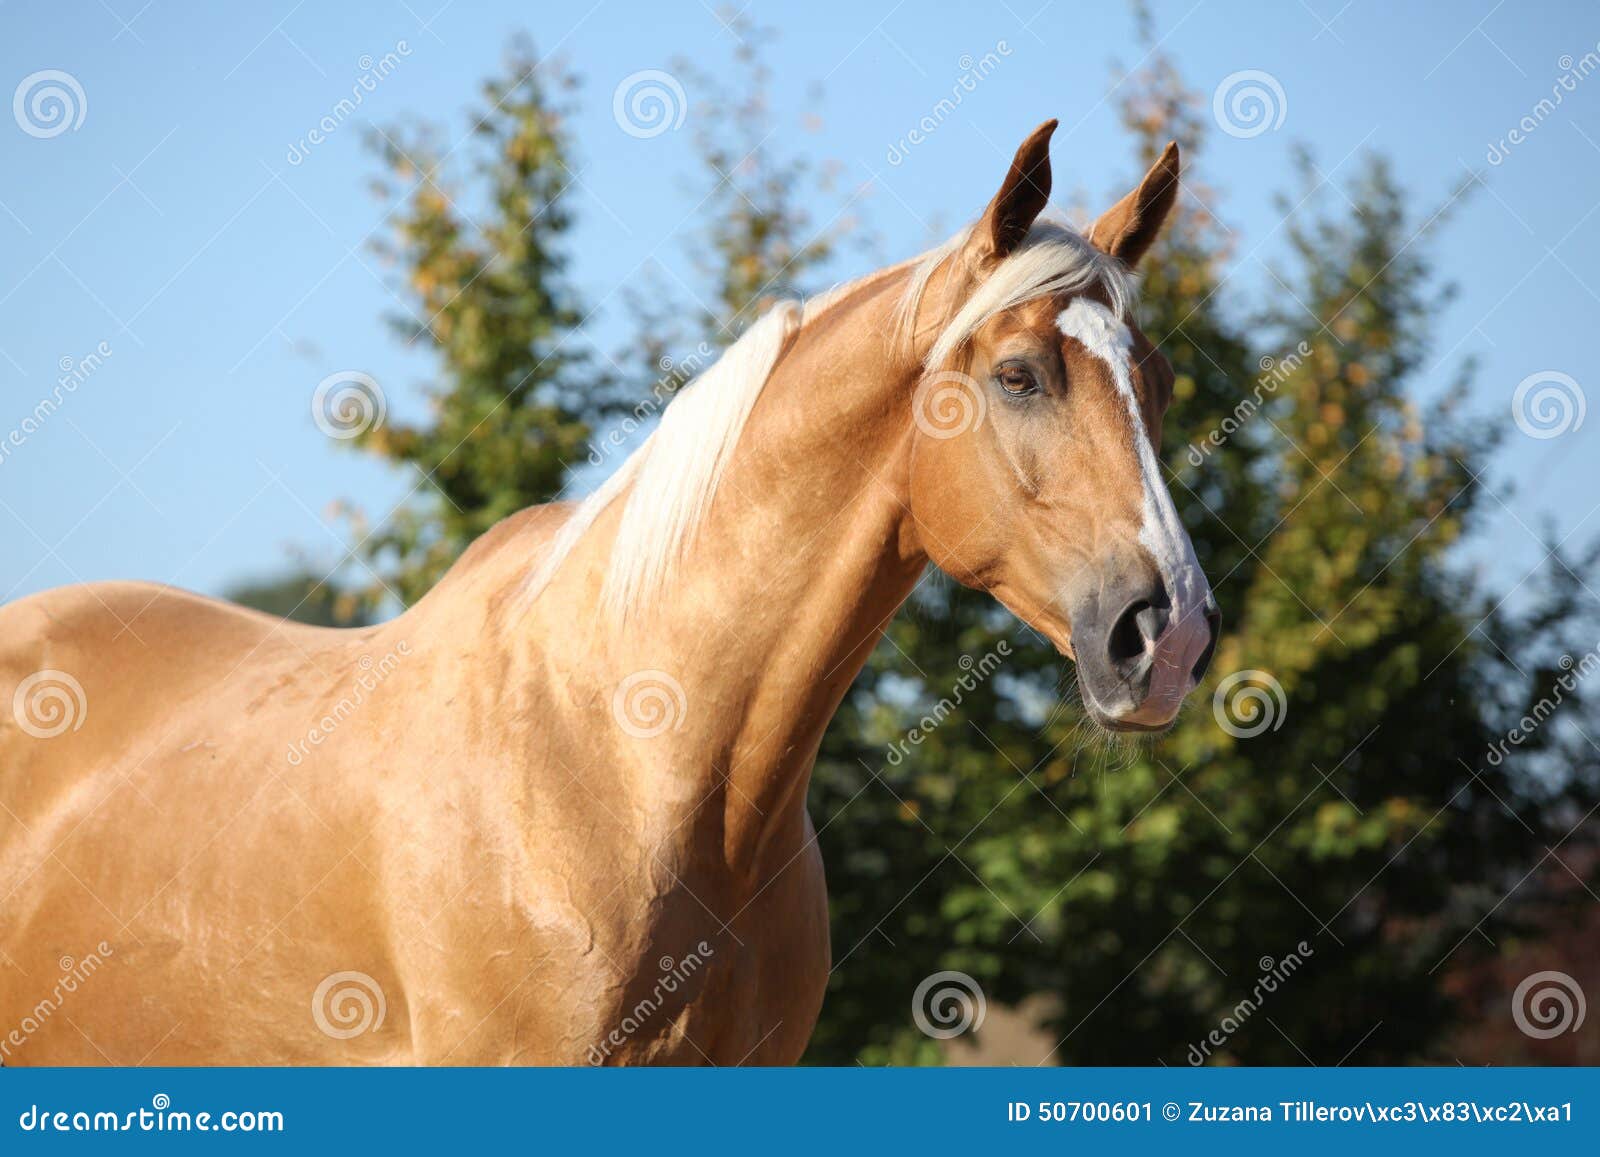 amazing palomino horse with blond hair